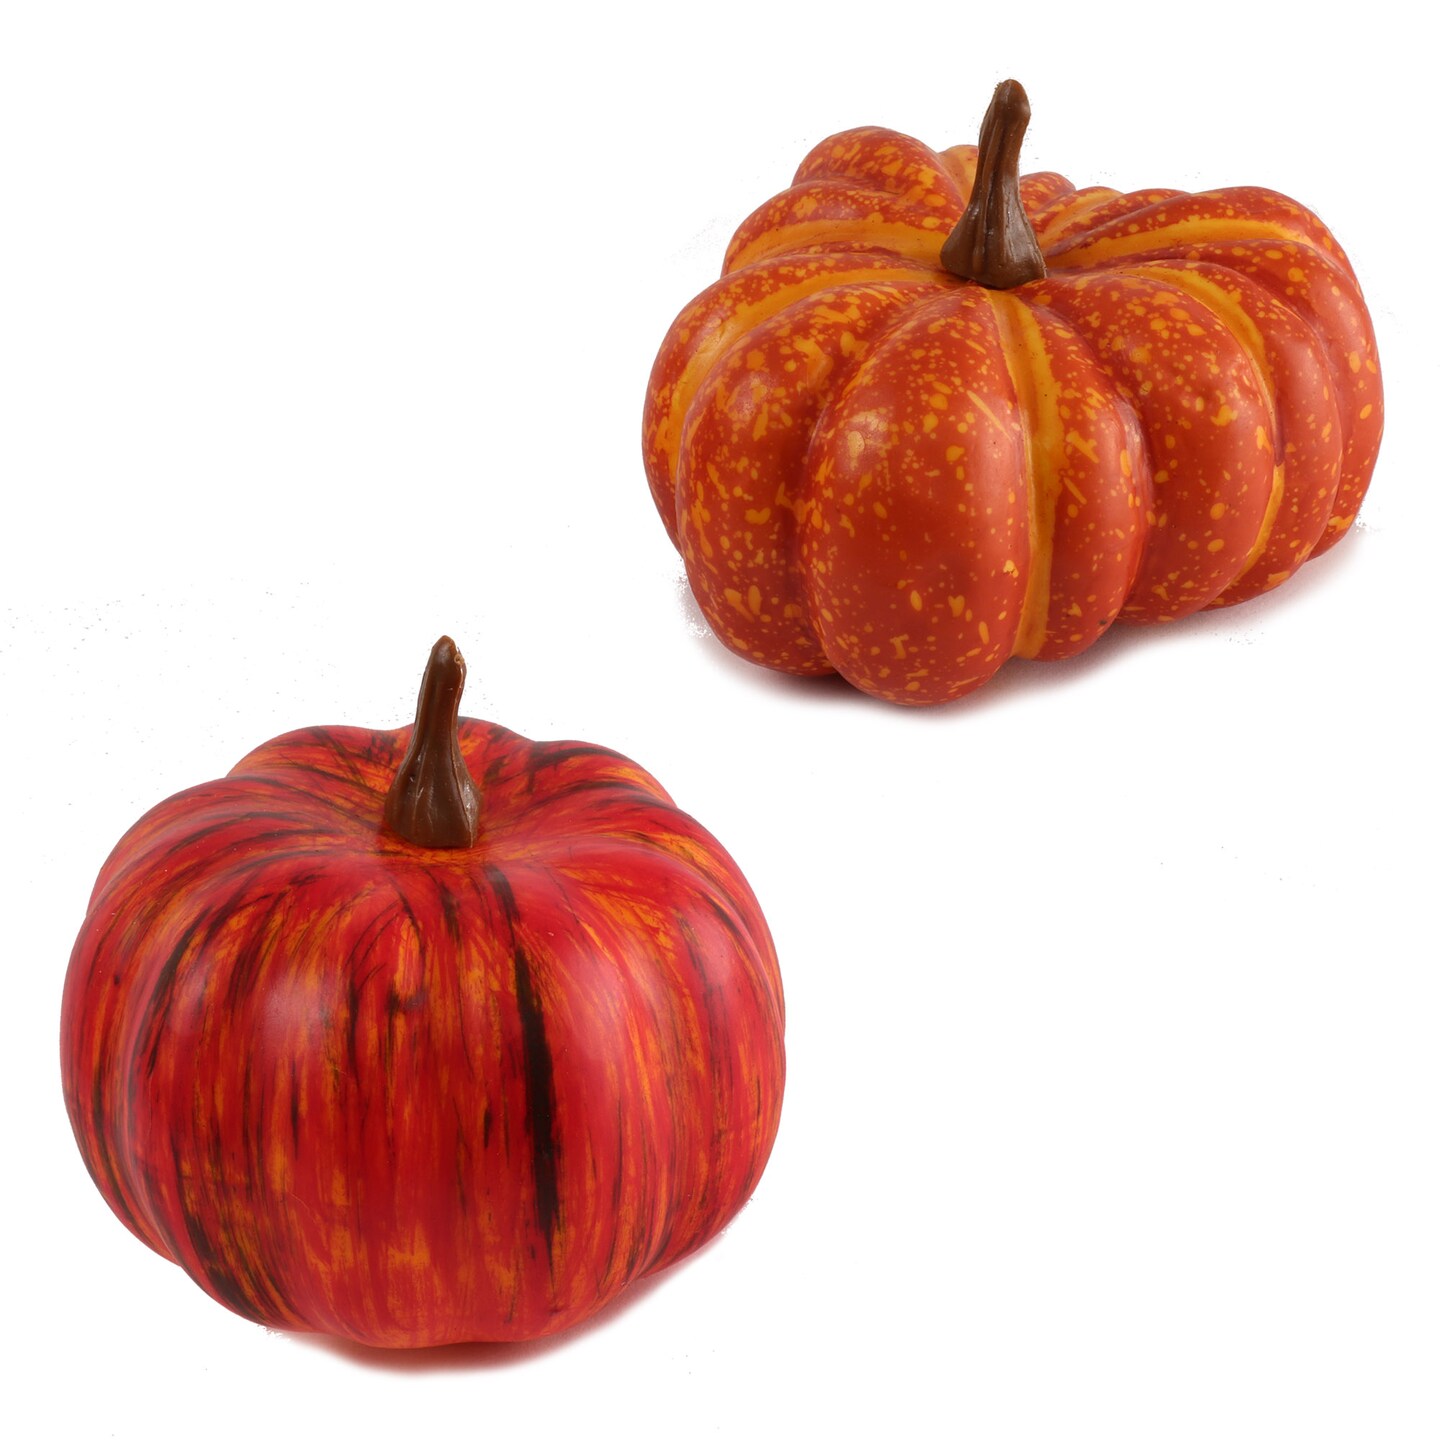 12-Pack: Artificial Vibrant Orange Pumpkins - Autumn Accents for Fall Crafts, Centerpieces